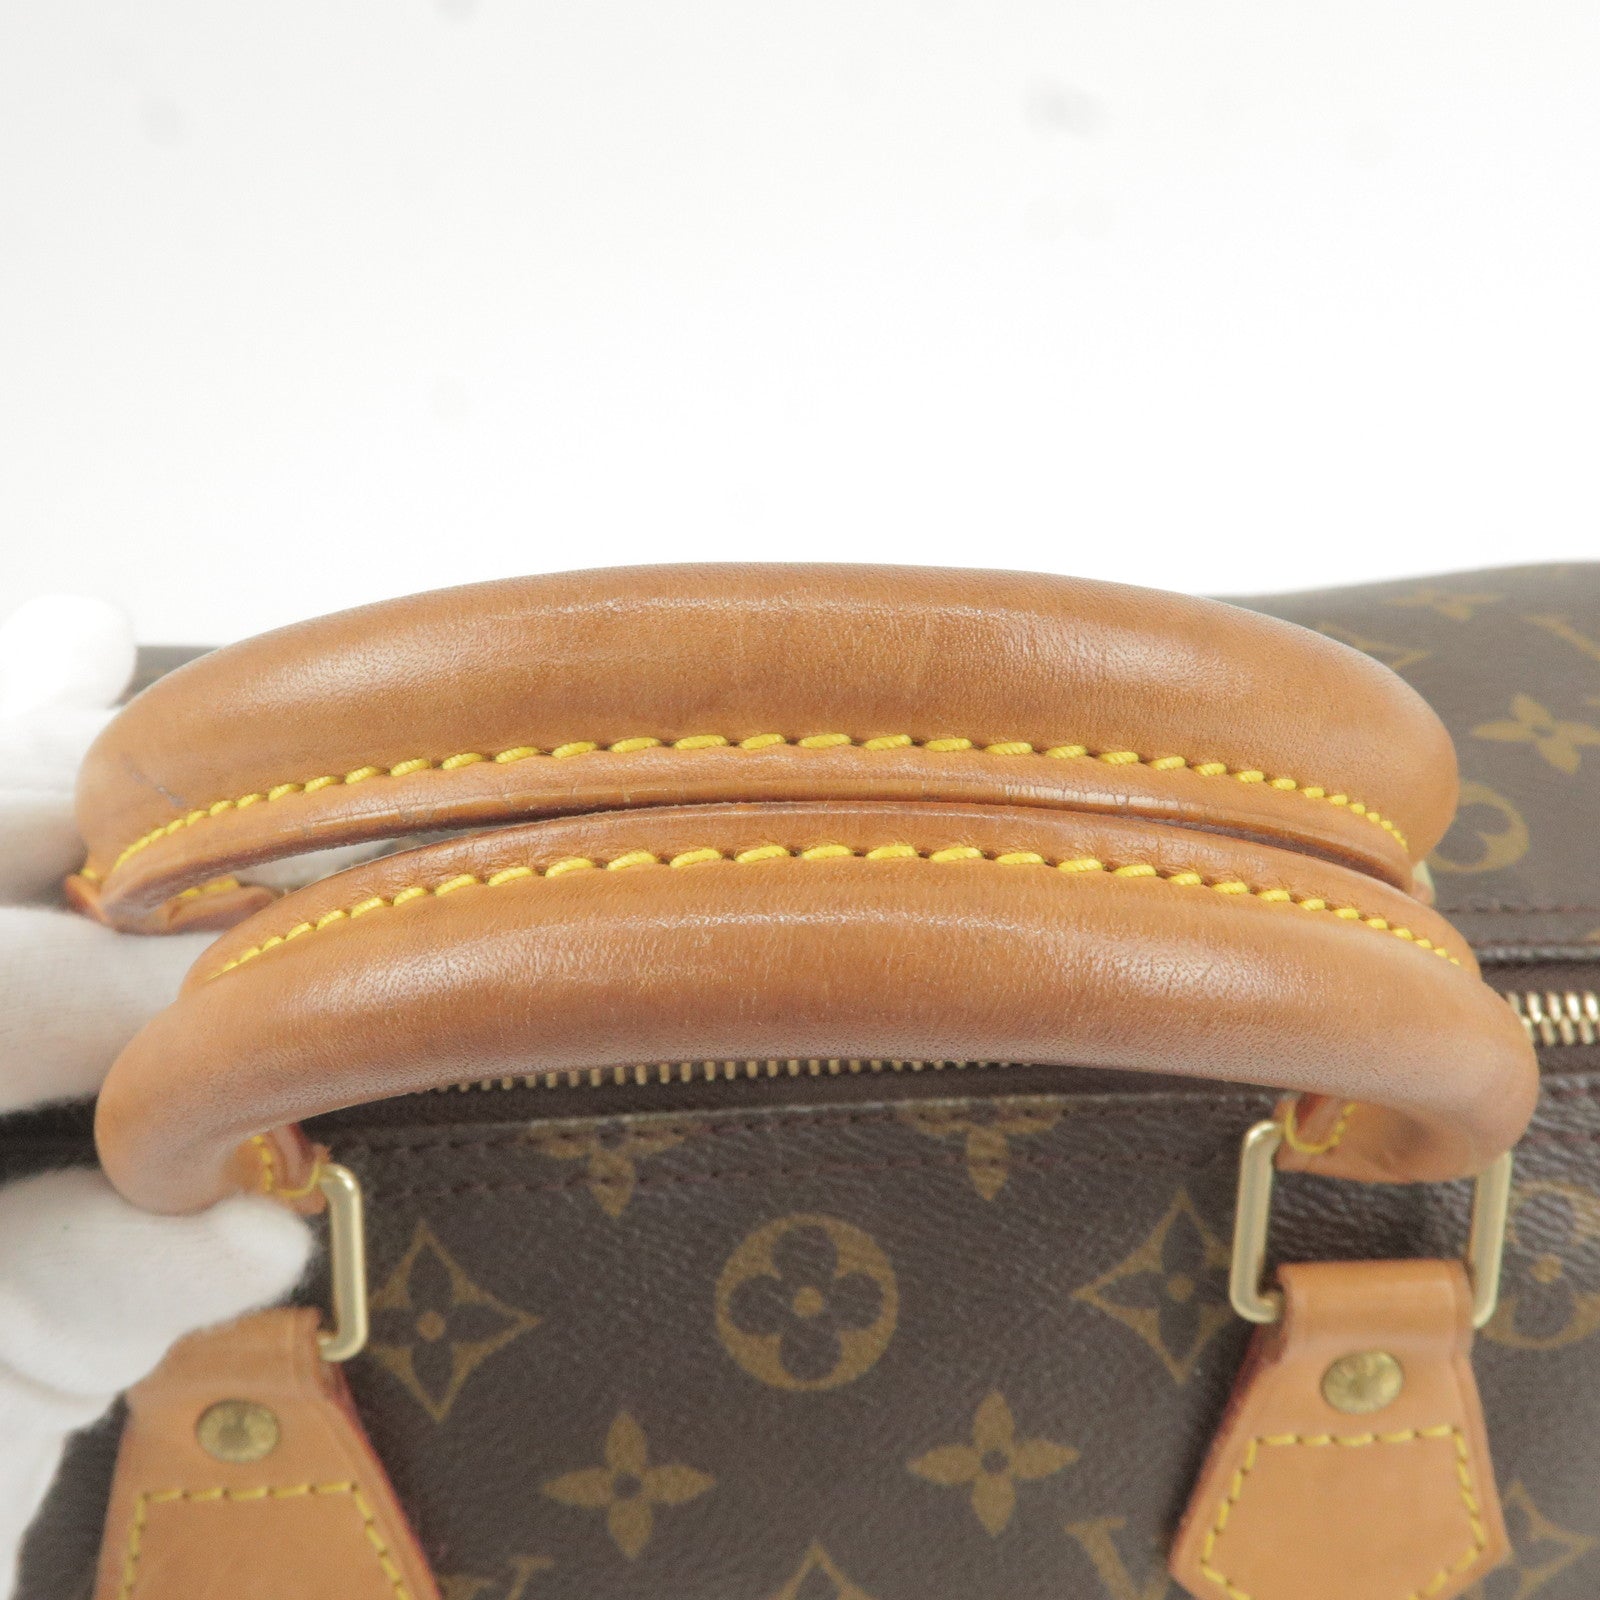 Louis Vuitton Jasmine Orange Leather Handbag (Pre-Owned)